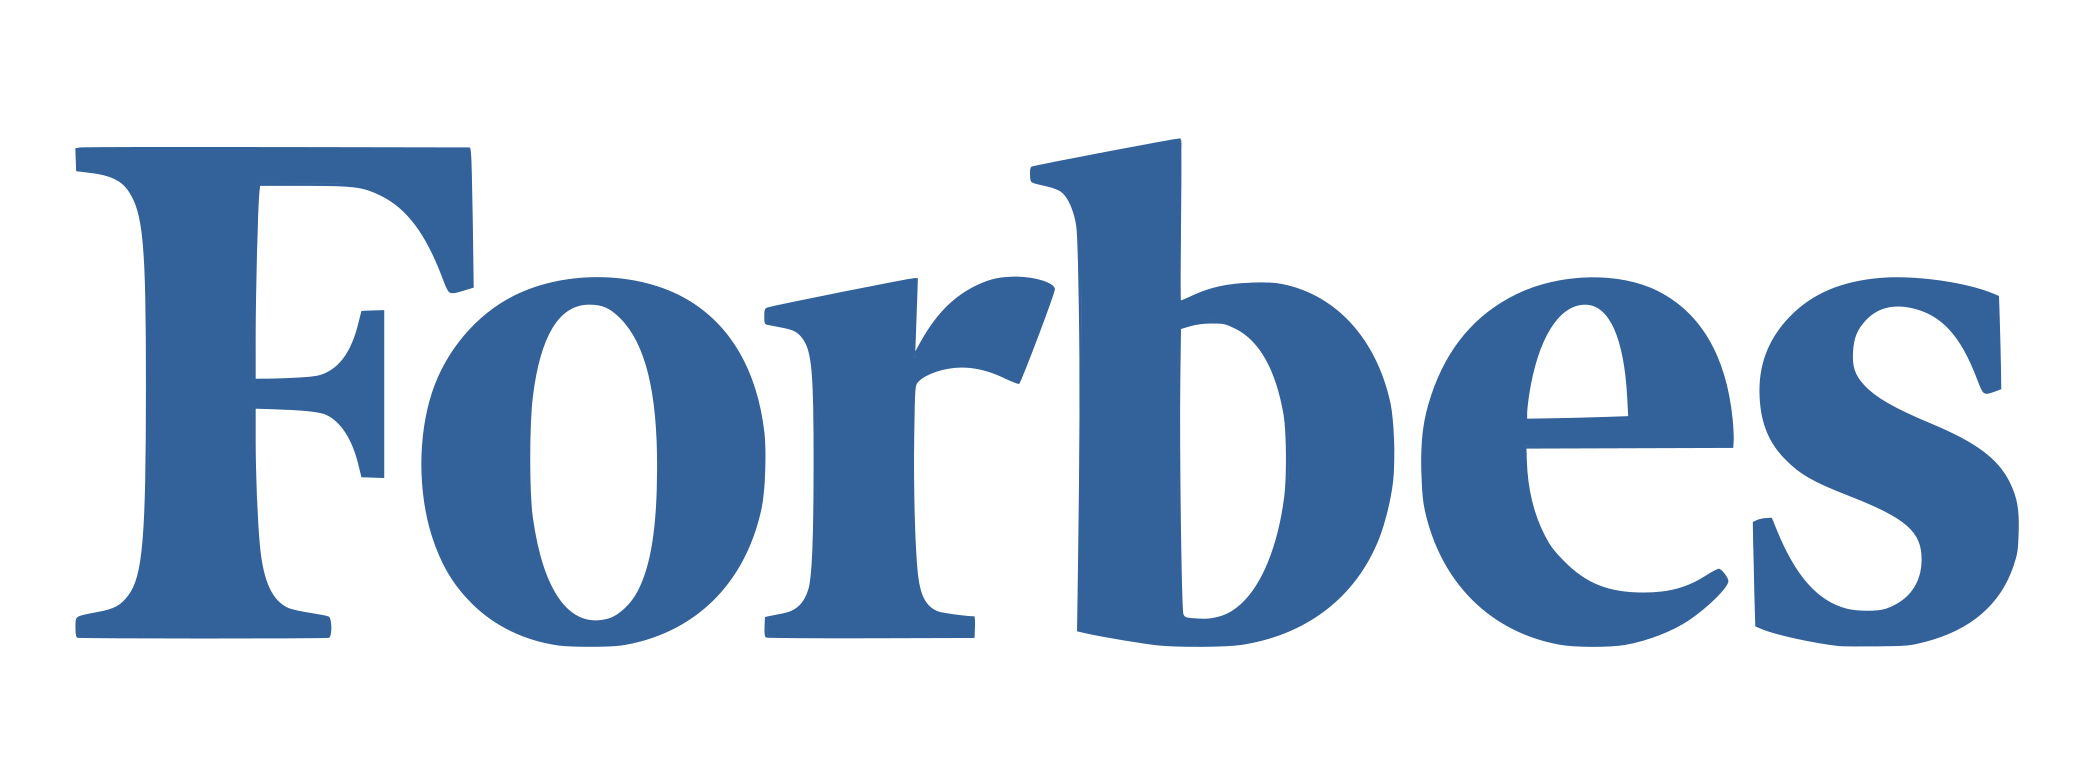 forbes logo 1 - Forbes Logo